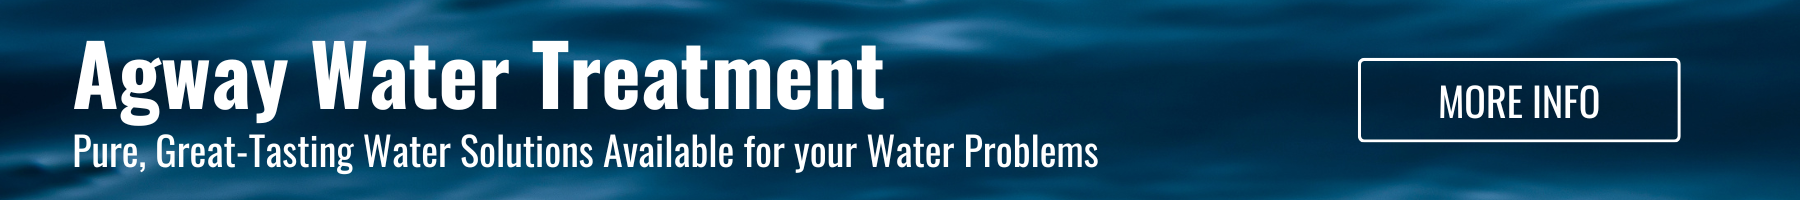 Agway water treatment banner